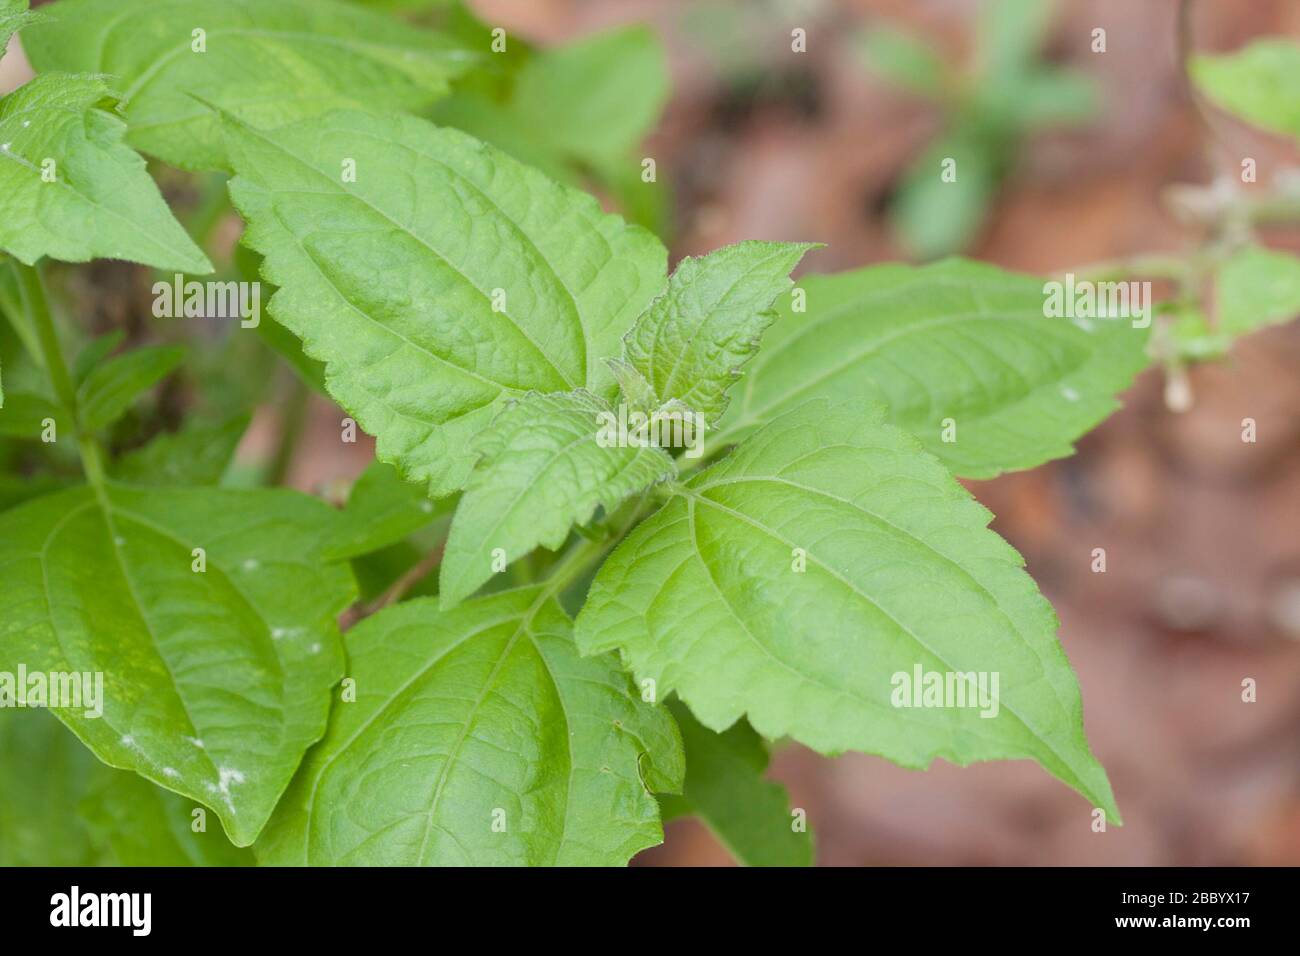 Medicinal plant of Thailand. Stock Photo